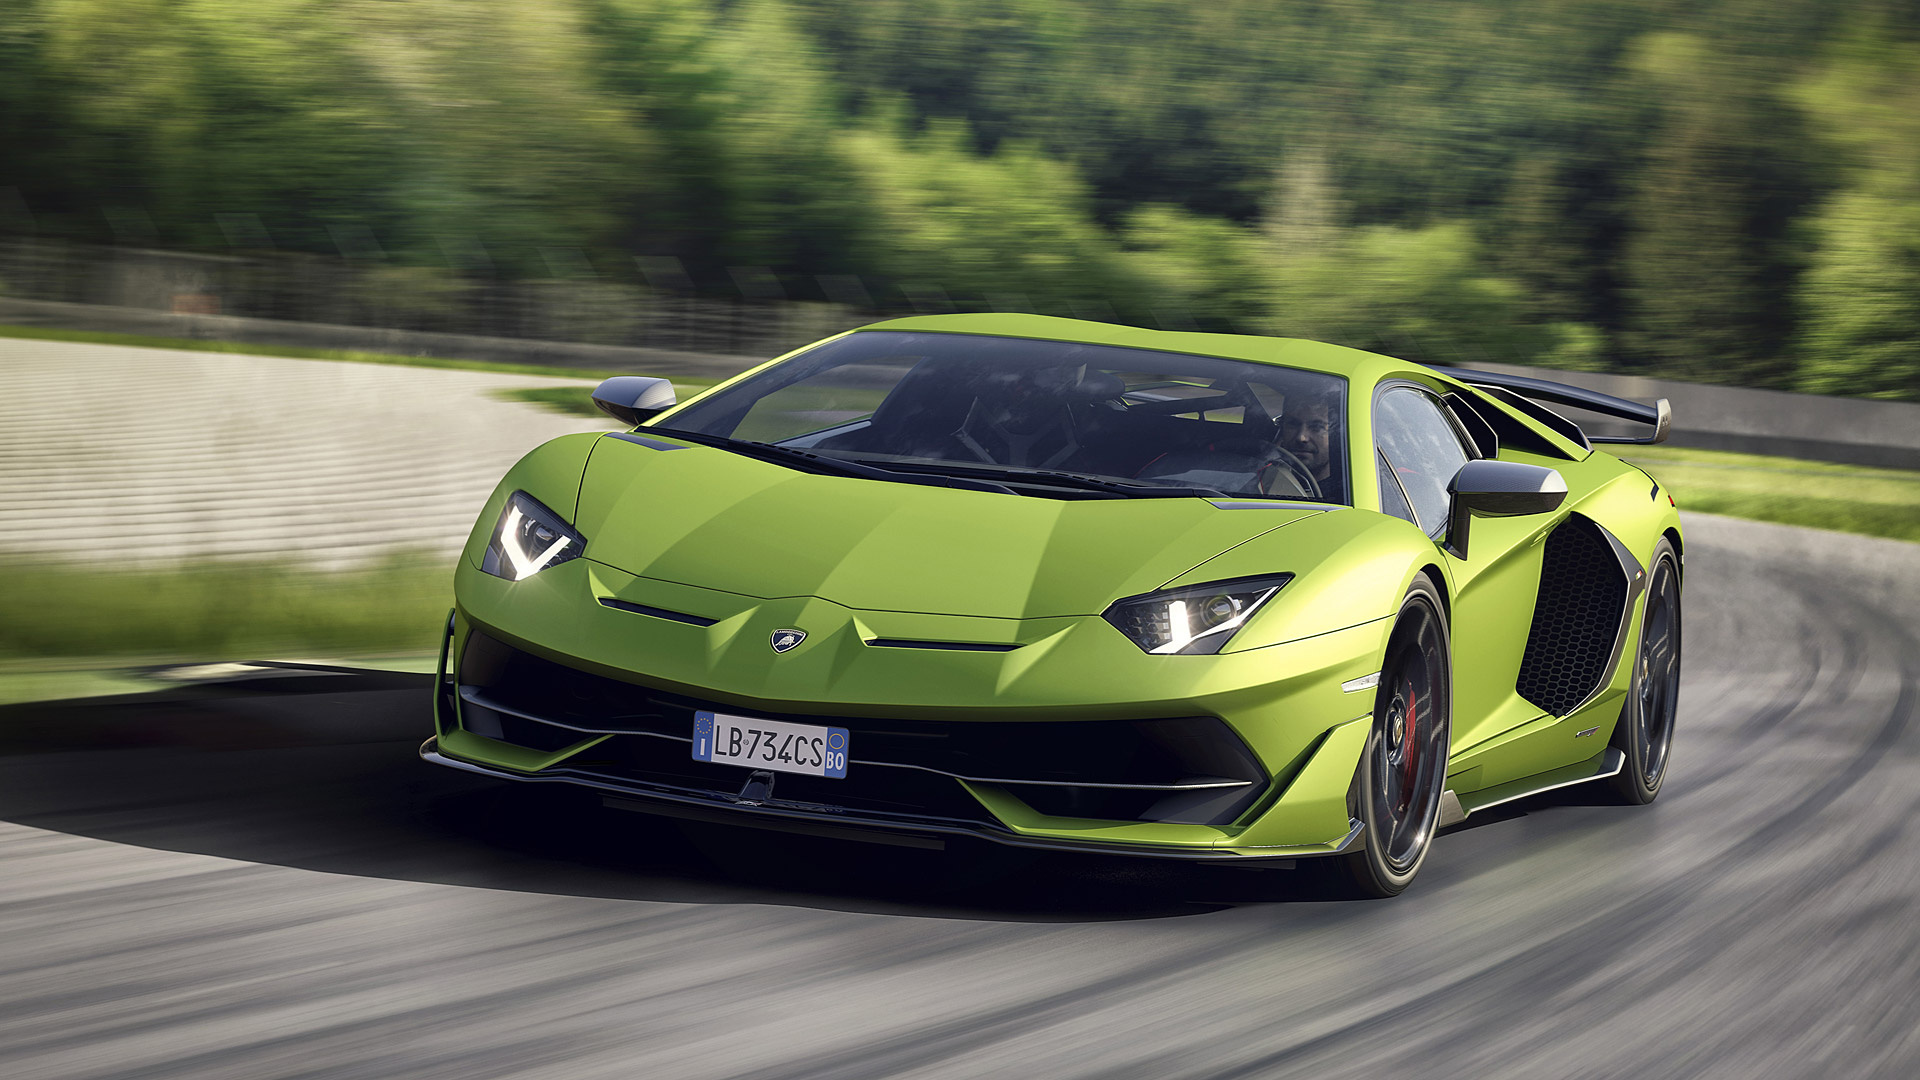 Lamborghini Aventador, Vibrant green beauty, Striking presence, Iconic supercar, 1920x1080 Full HD Desktop